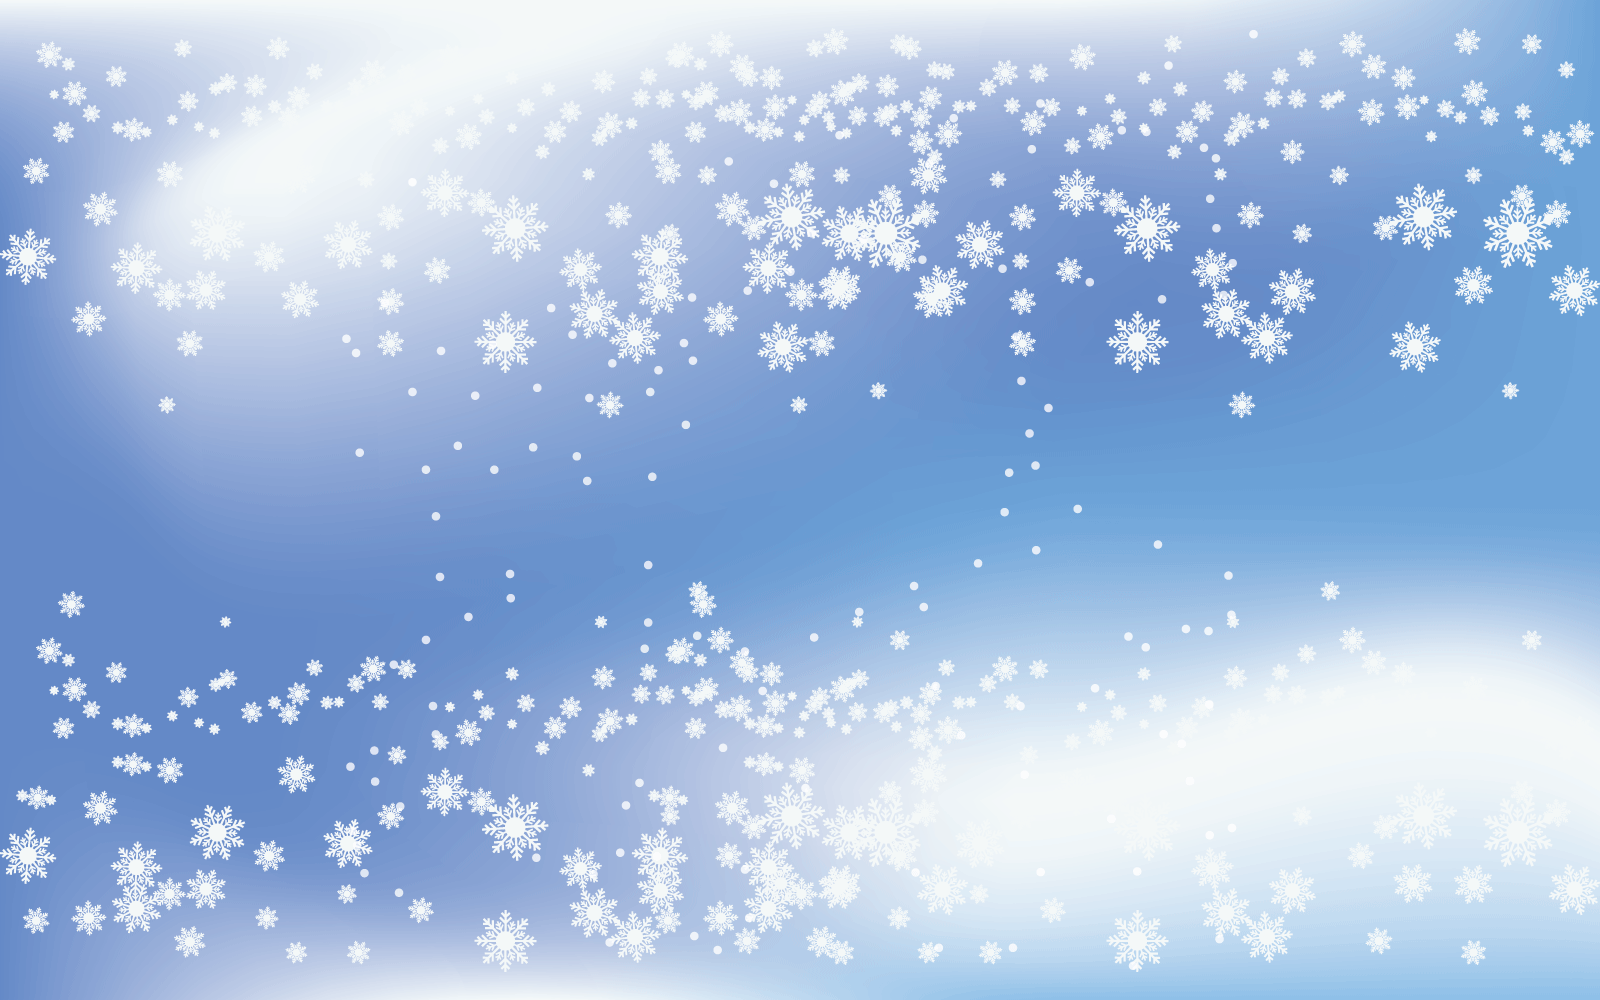 Snowflakes background snowfall illustration template